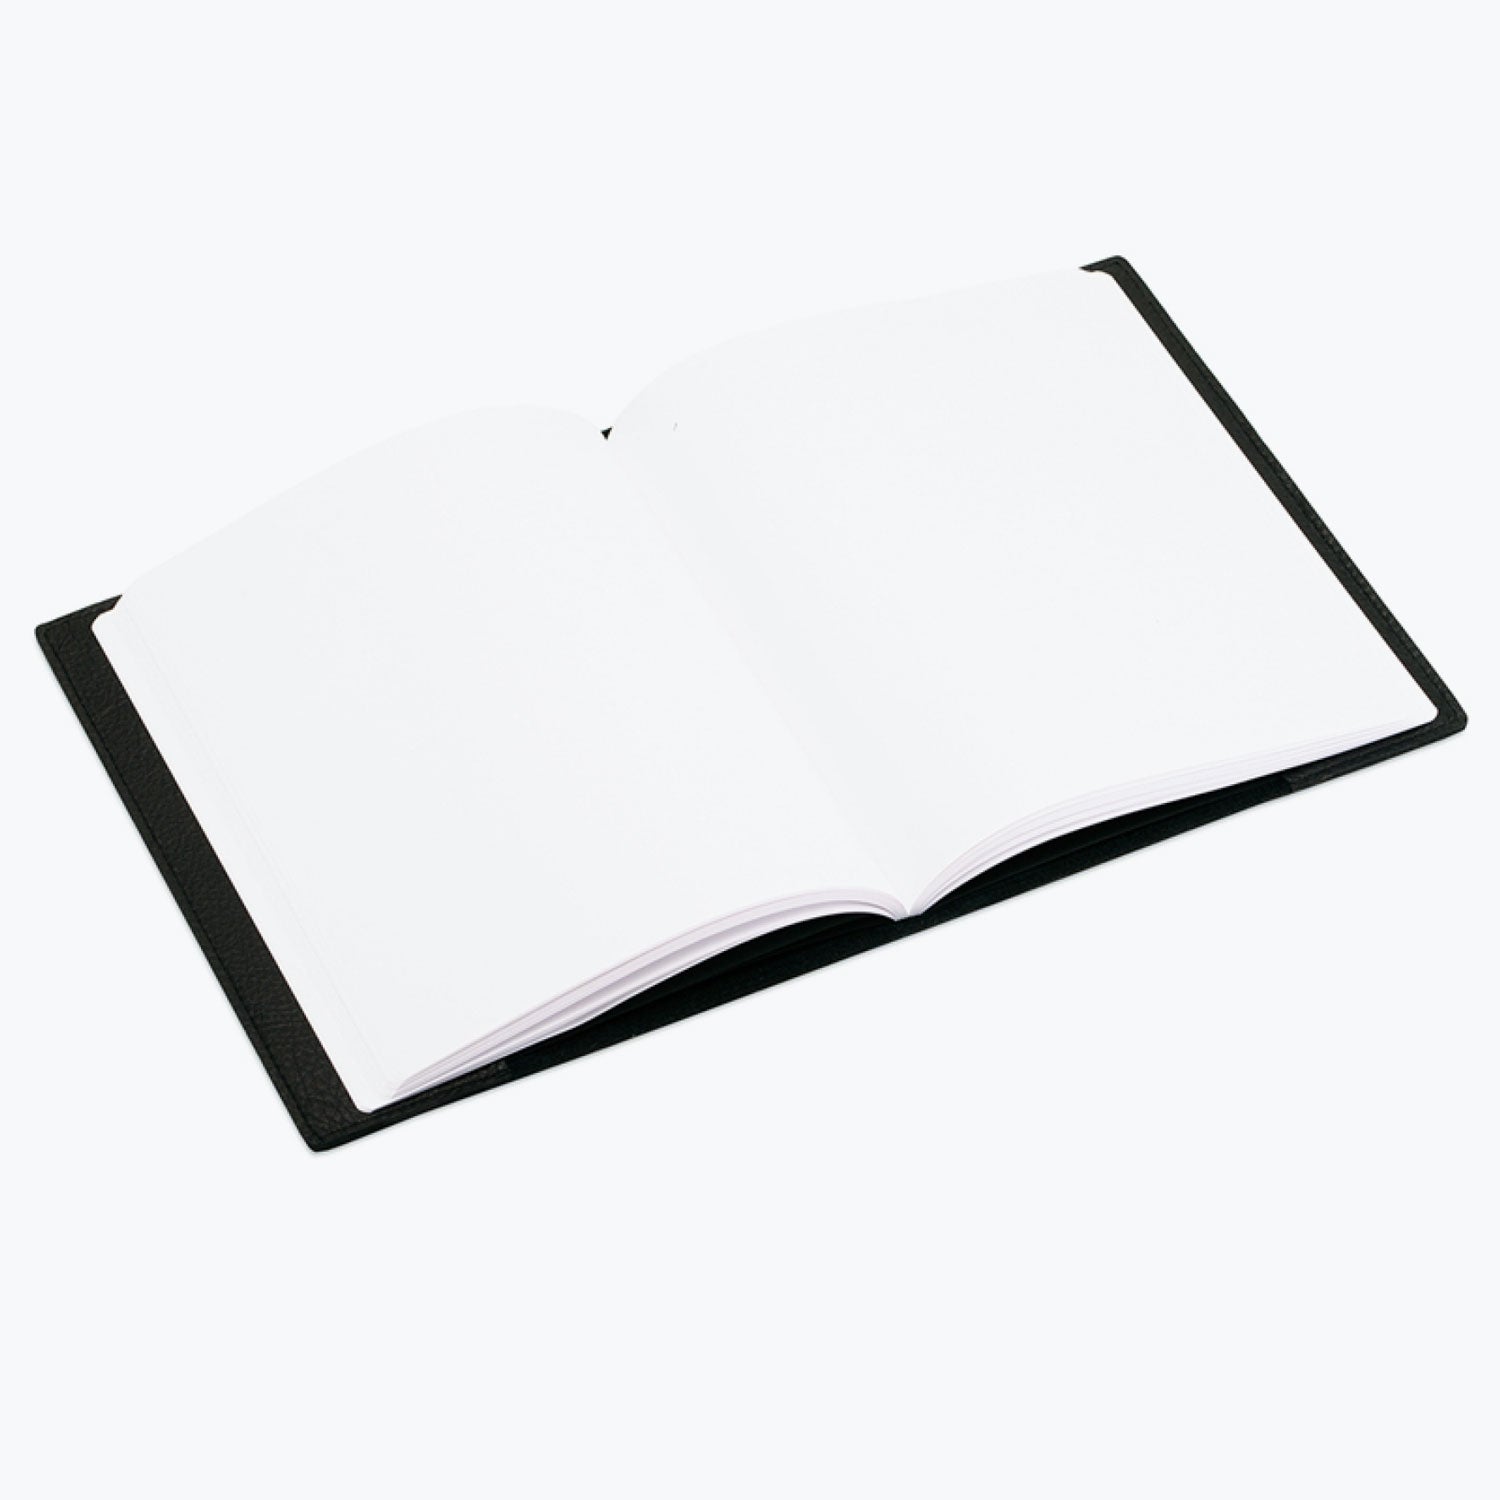 Bookbinders Design - Notebook - Leather - Regular - Cognac